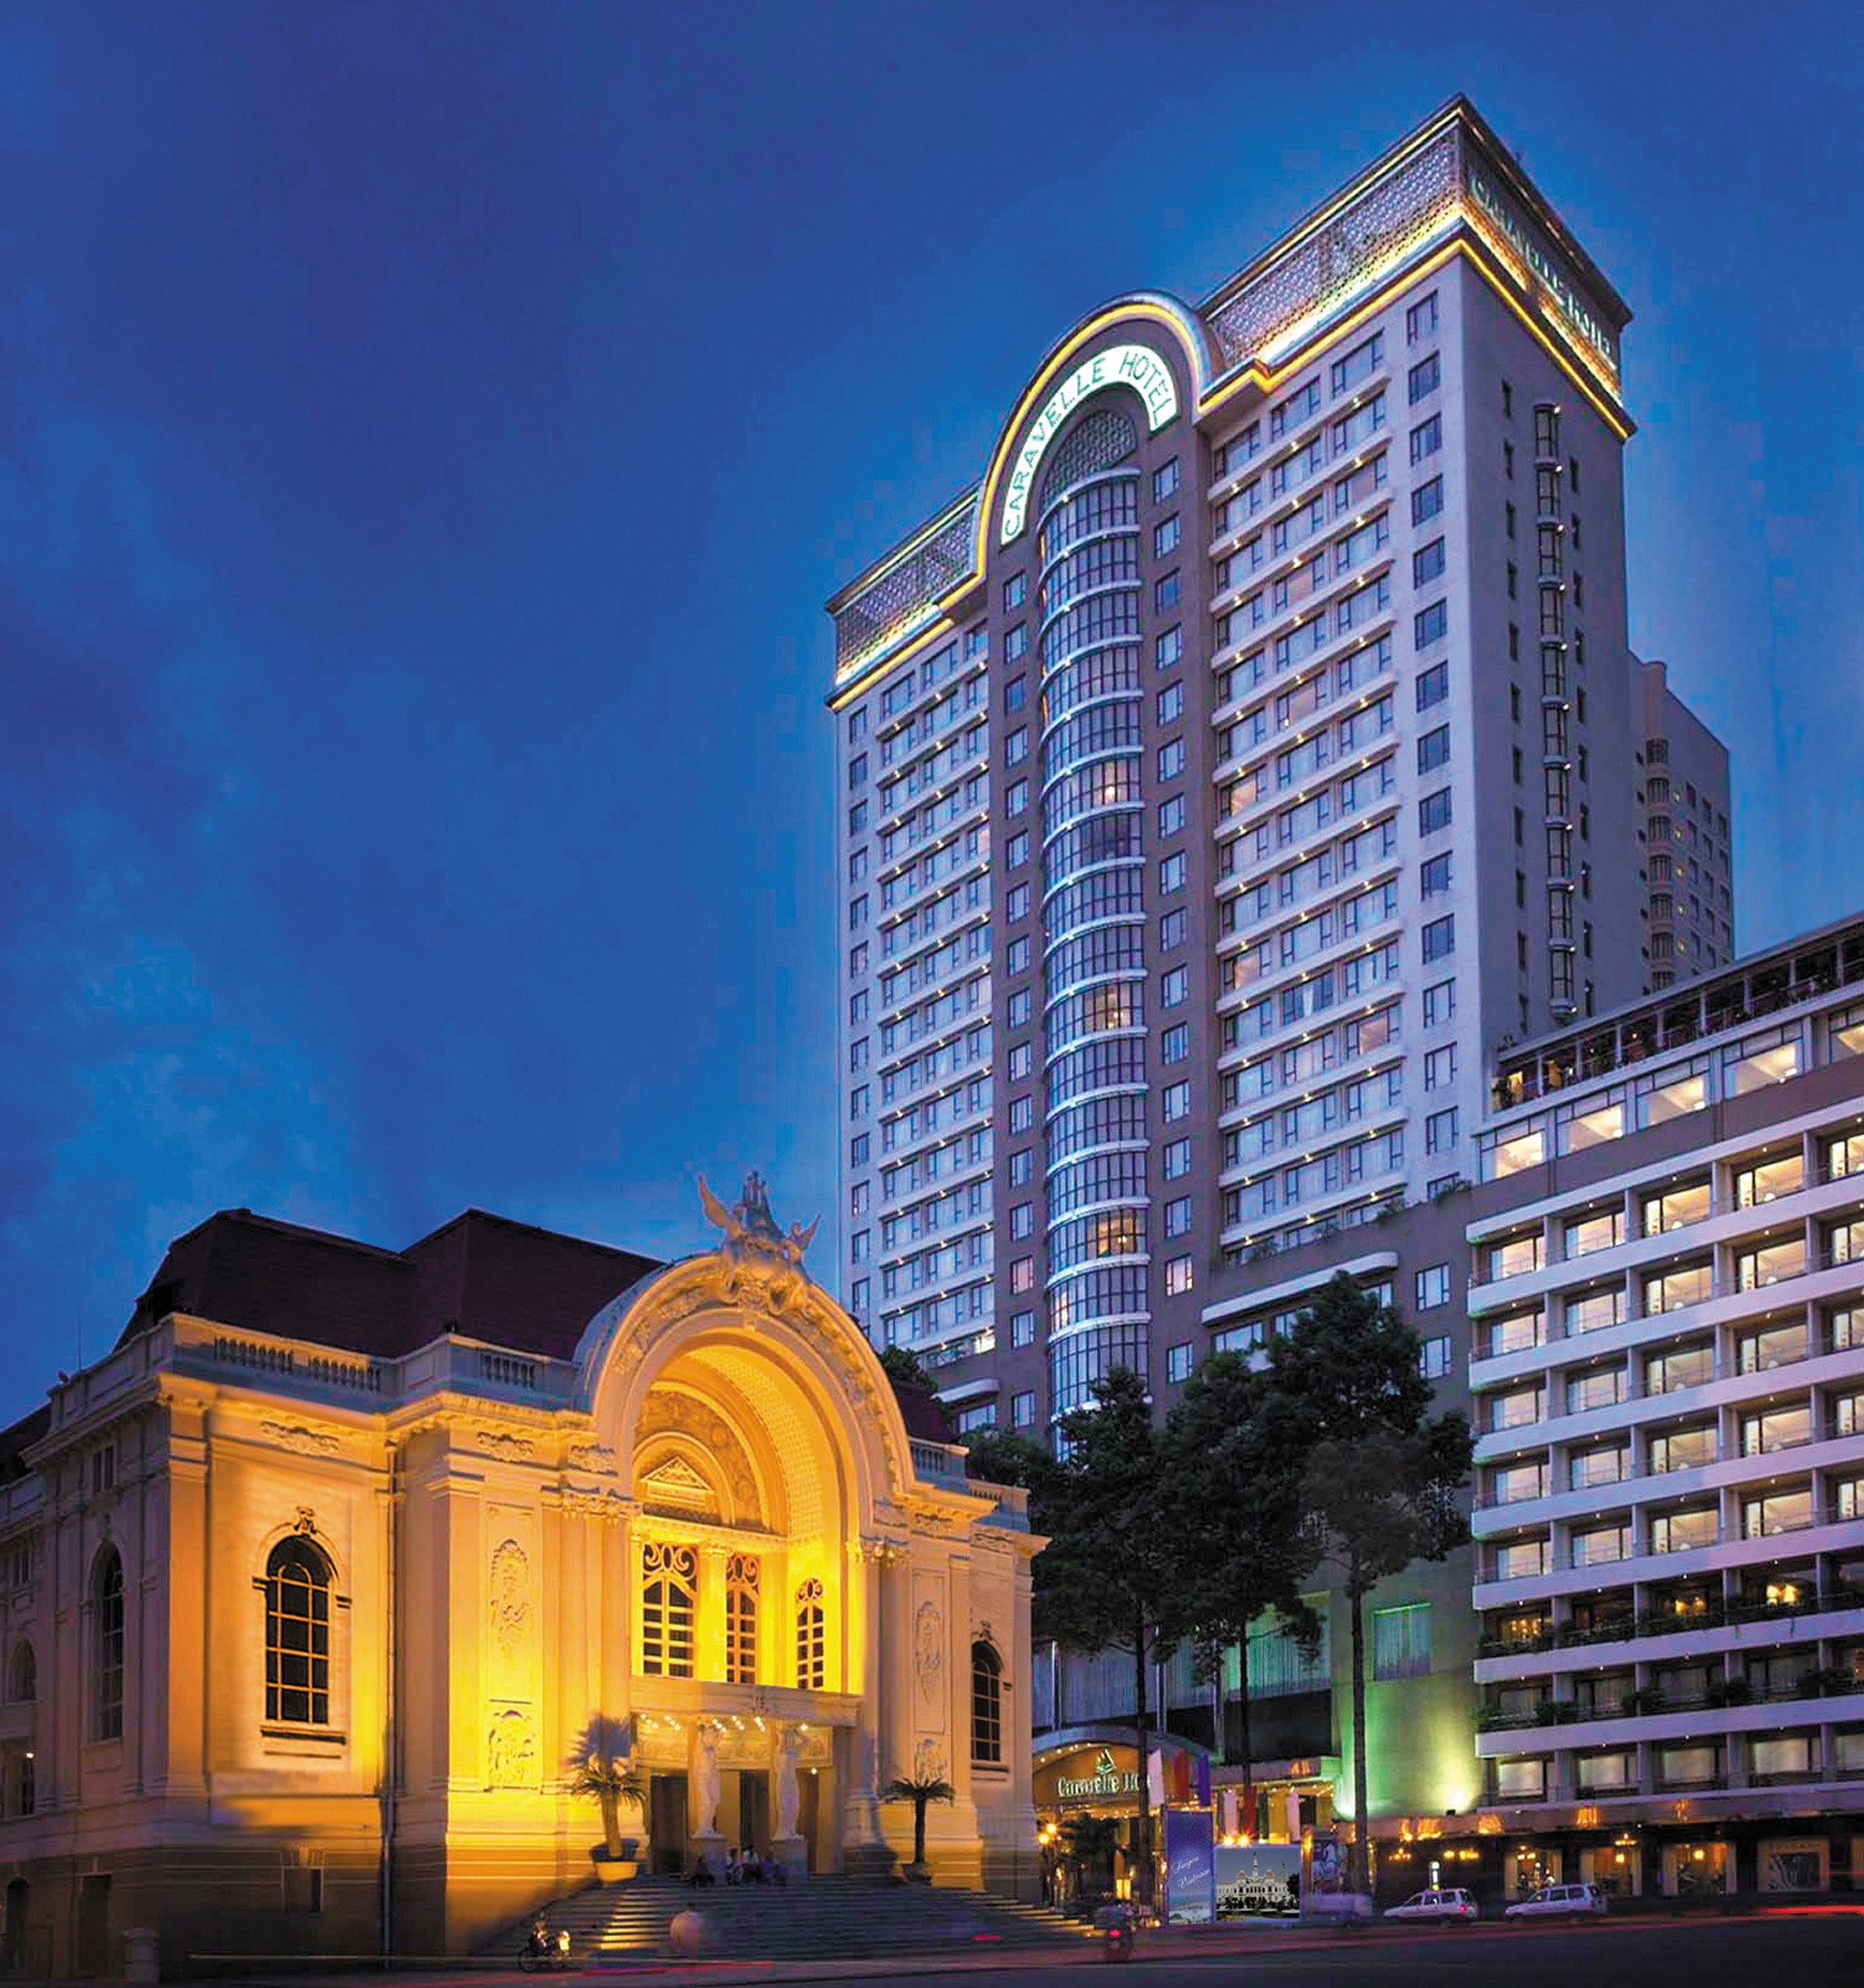 Caravelle Hotel Saigon